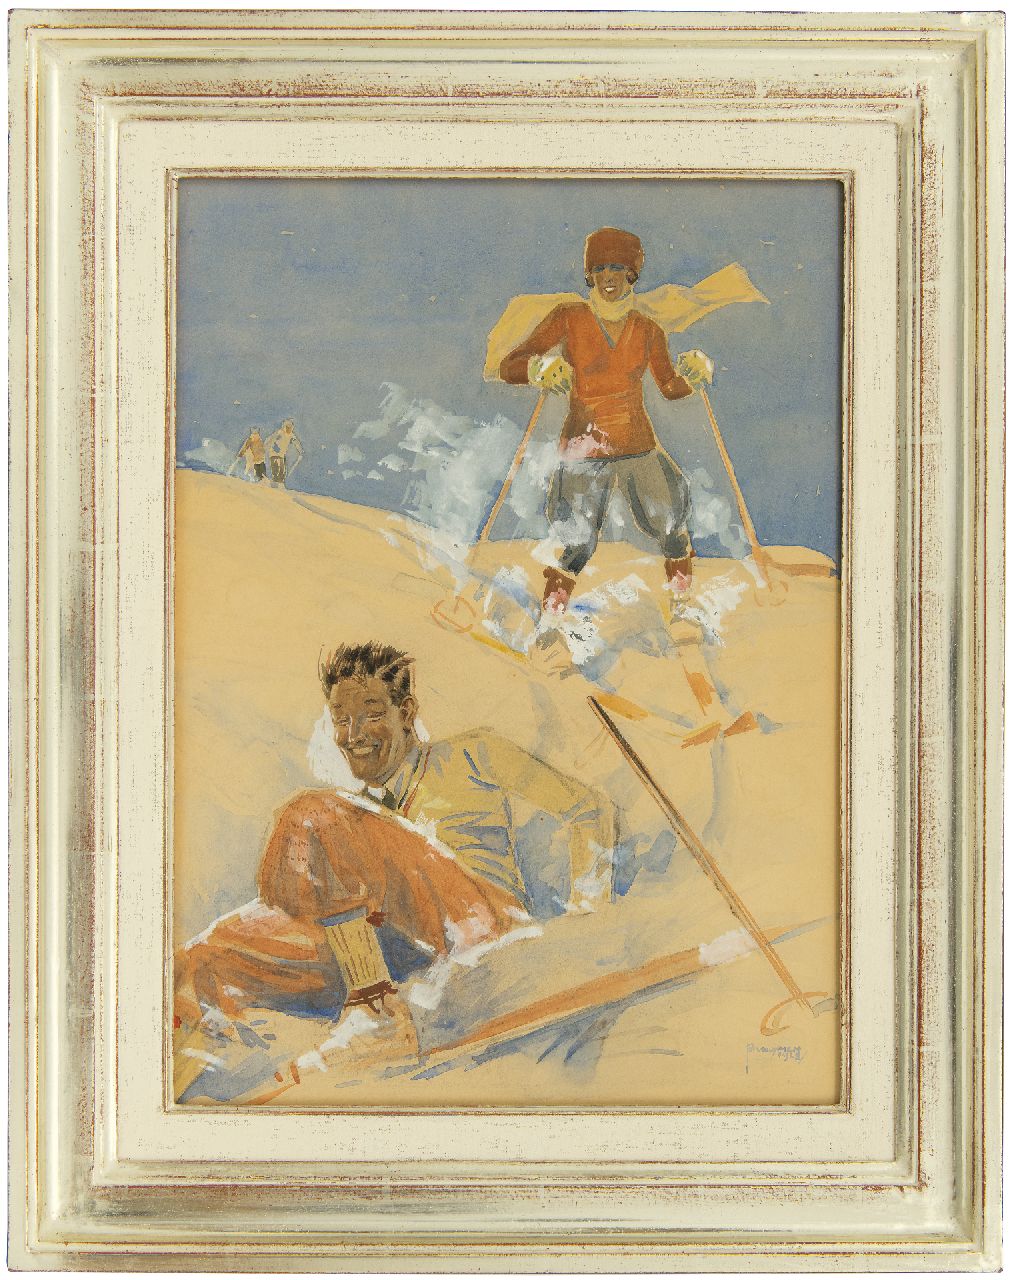 Vlijmen B.A.I.G. van | Bernardus Alphonsus Ignatius Gerardus 'Bernard' van Vlijmen, Ski fun, watercolour on paper 47.6 x 34.0 cm, signed l.r. and dated 1928